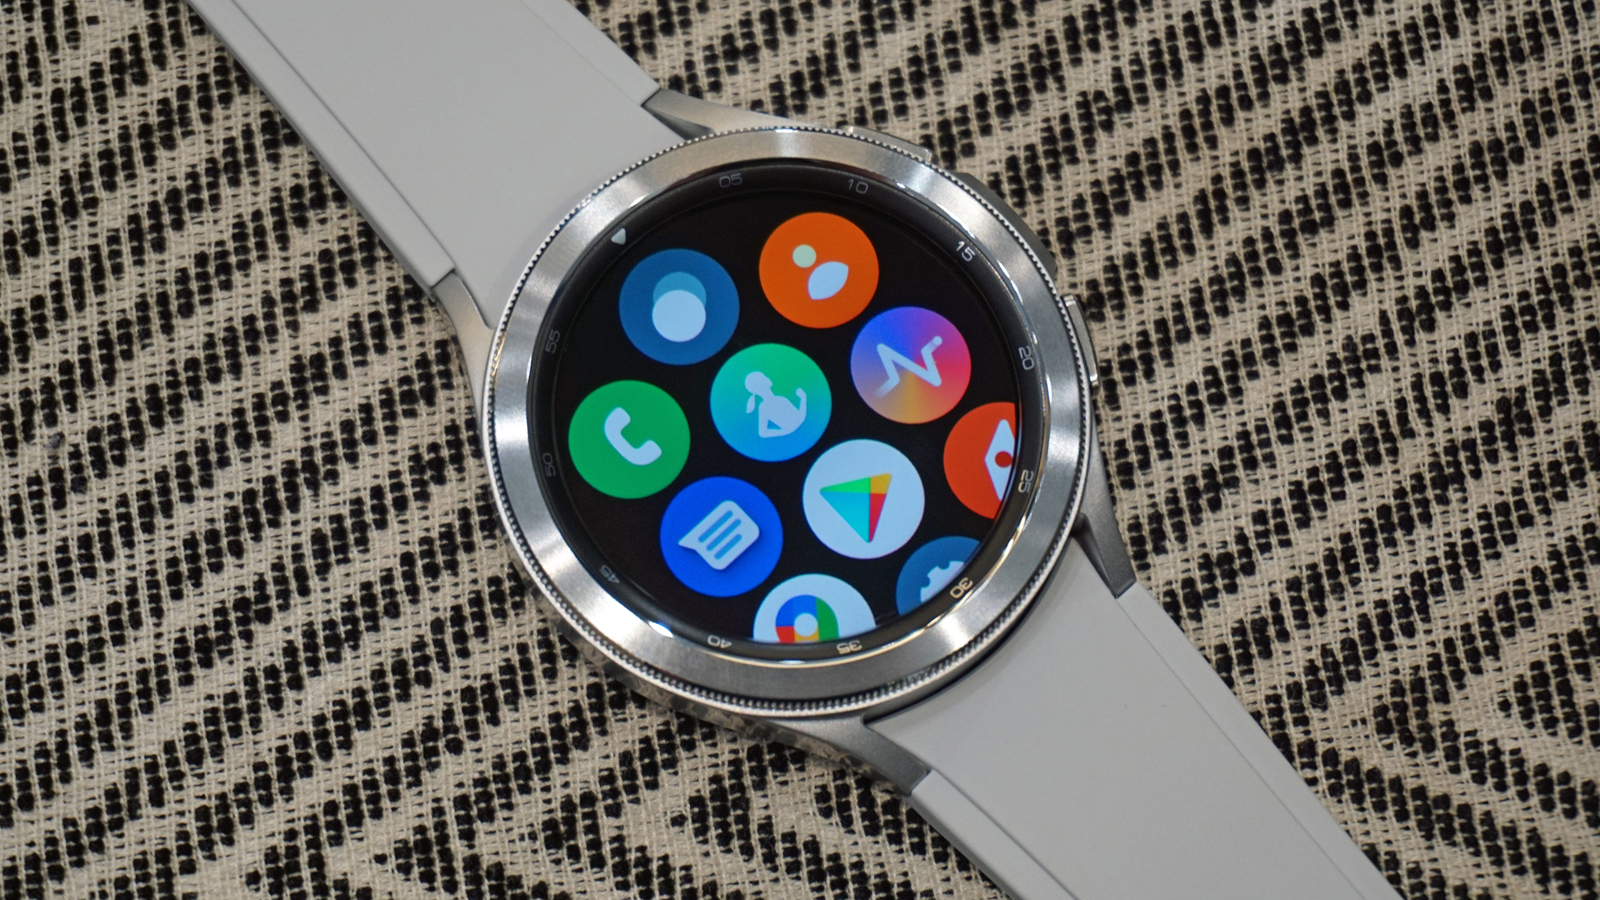 Nama Samsung Galaxy Watch 5 Pro muncul lagi di aplikasi Samsung